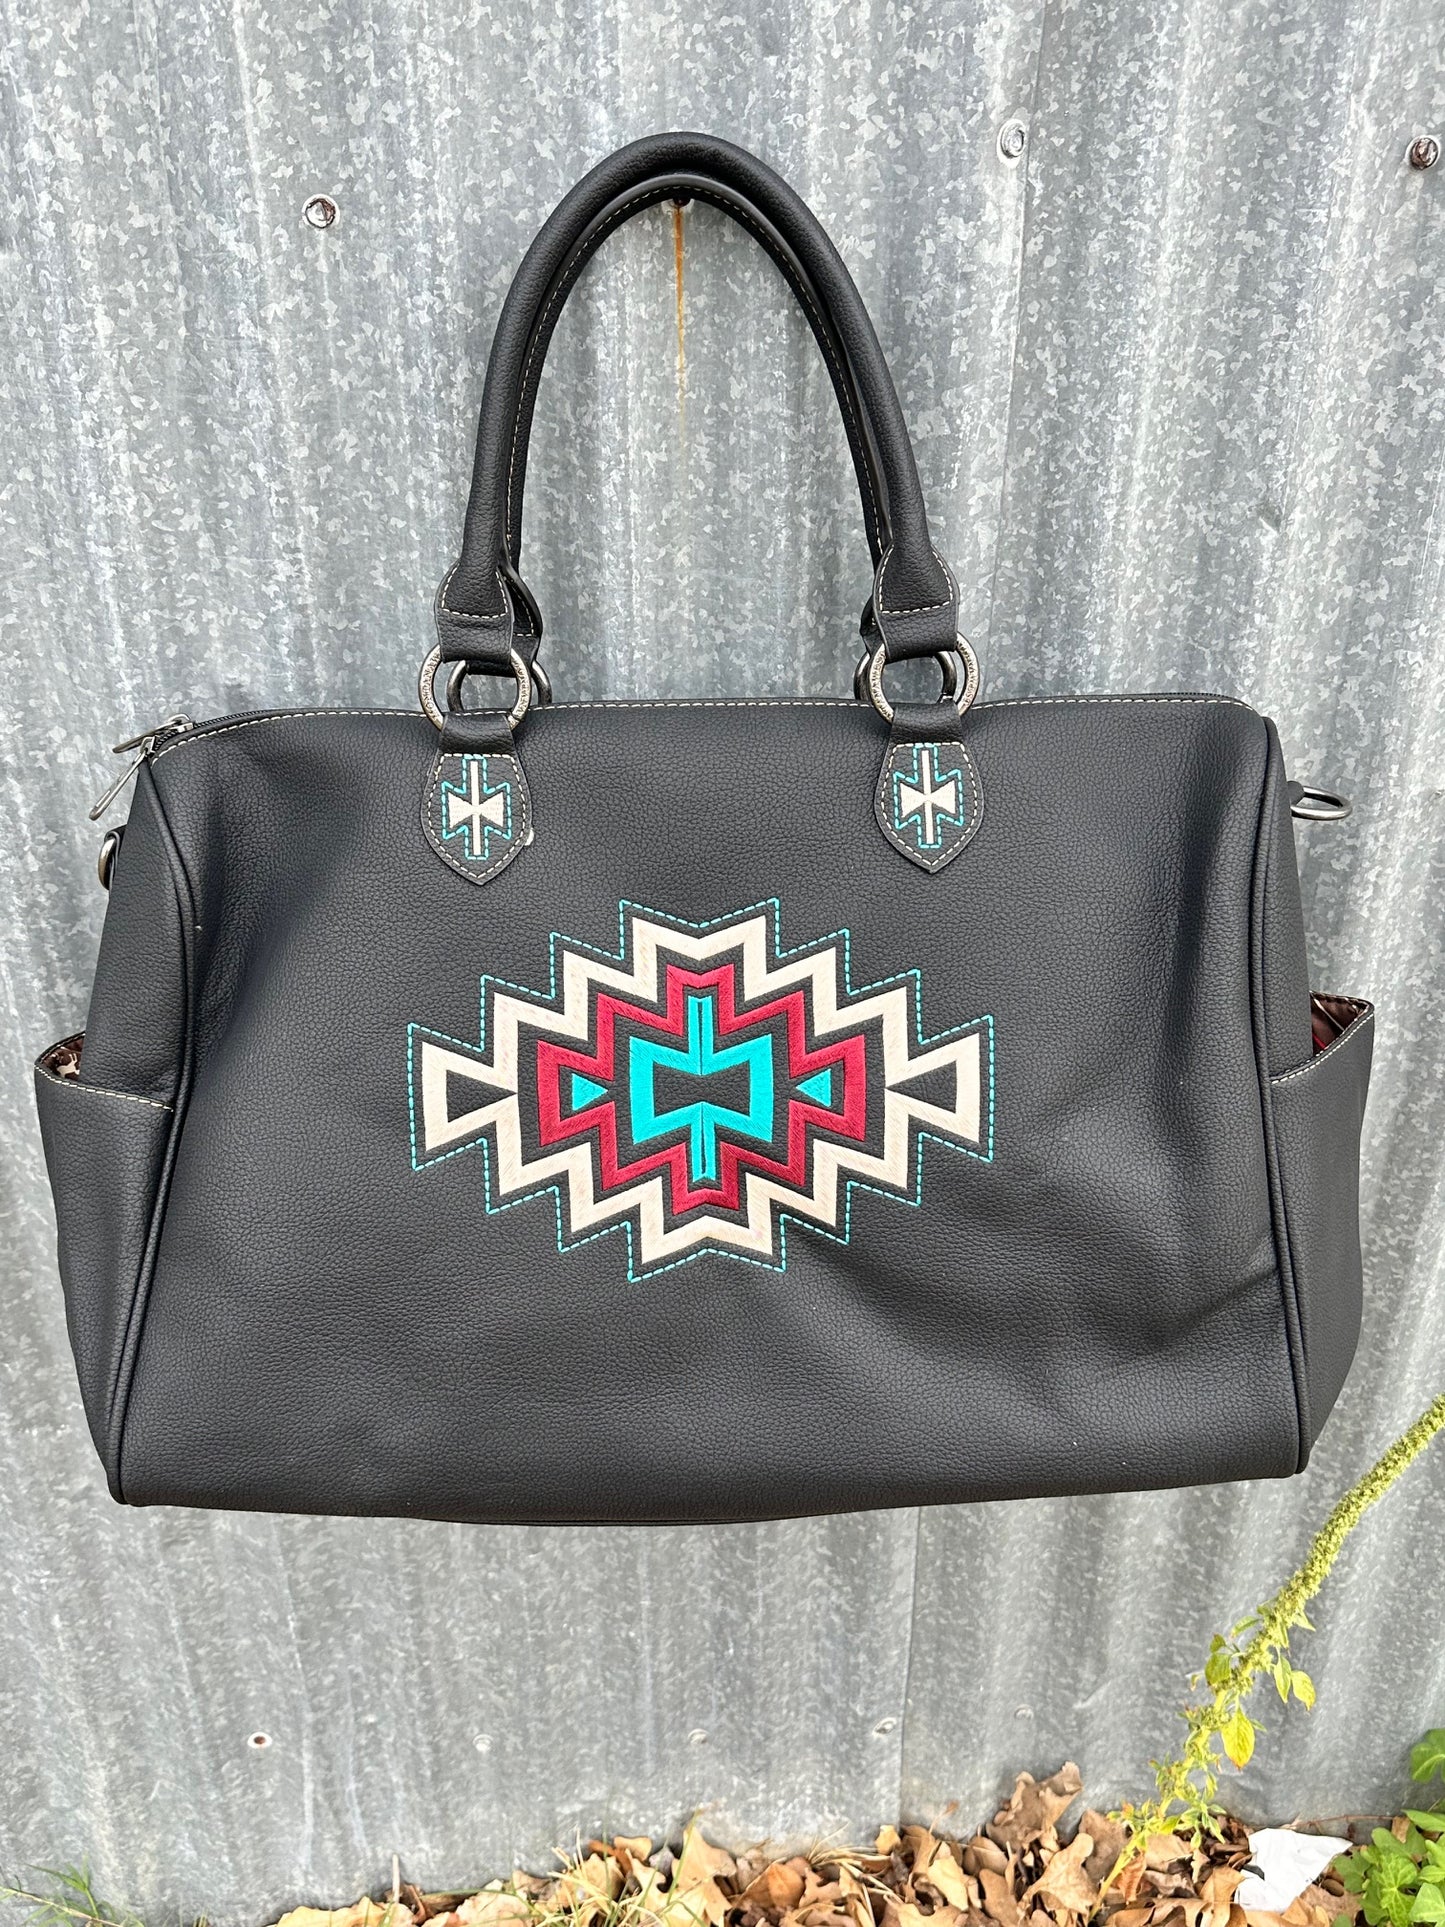 Montana West Leather Weekender Bag